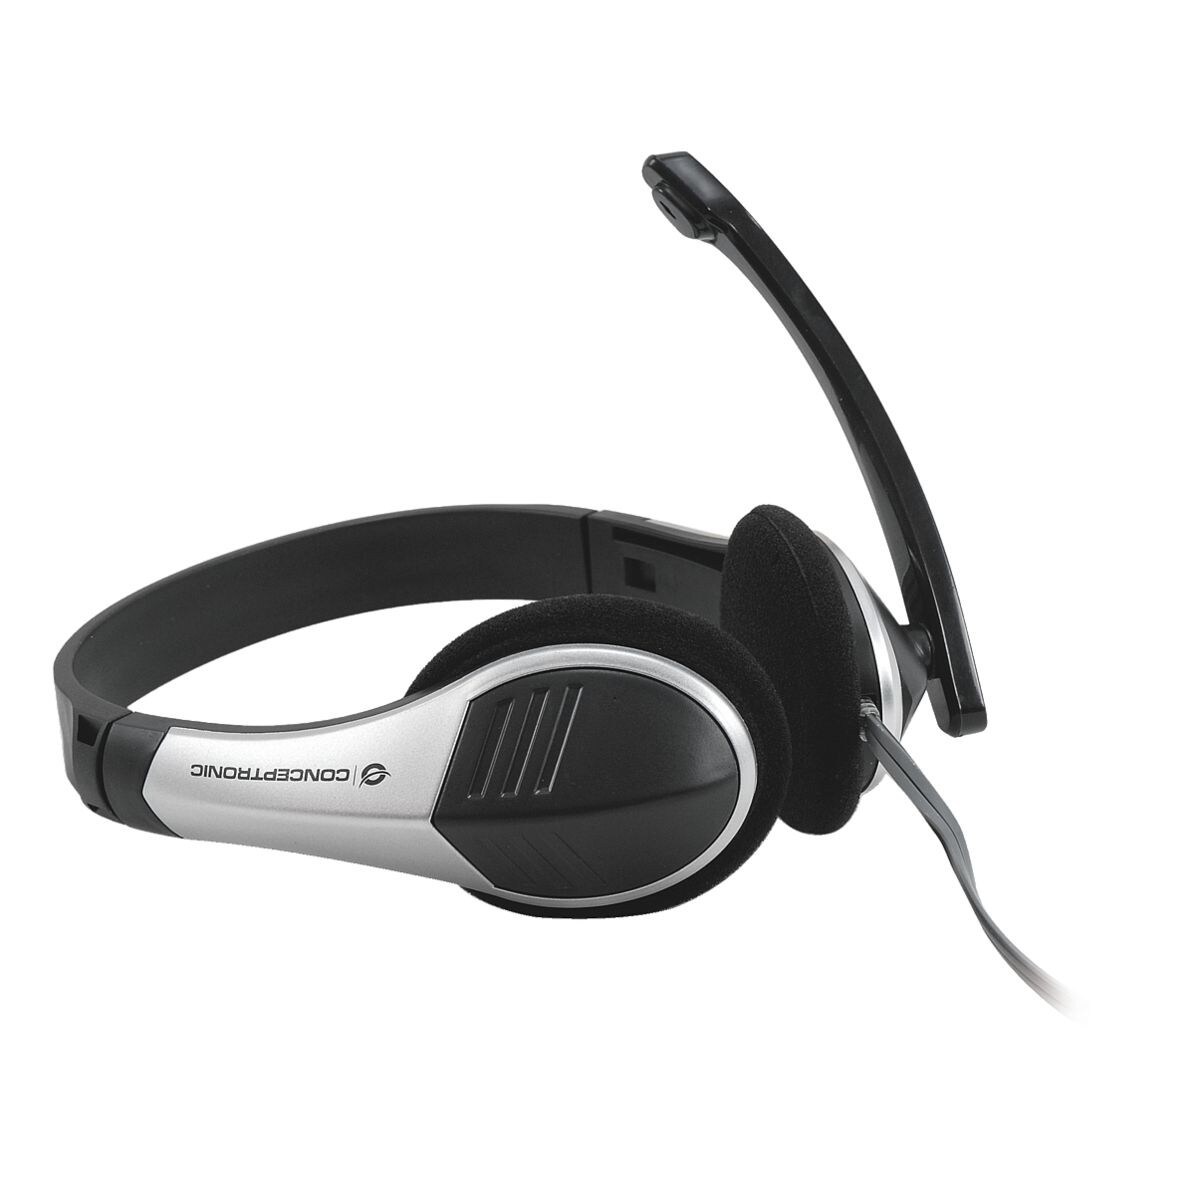 Conceptronic Headset CCHATSTAR2 binaural 3,5 mm